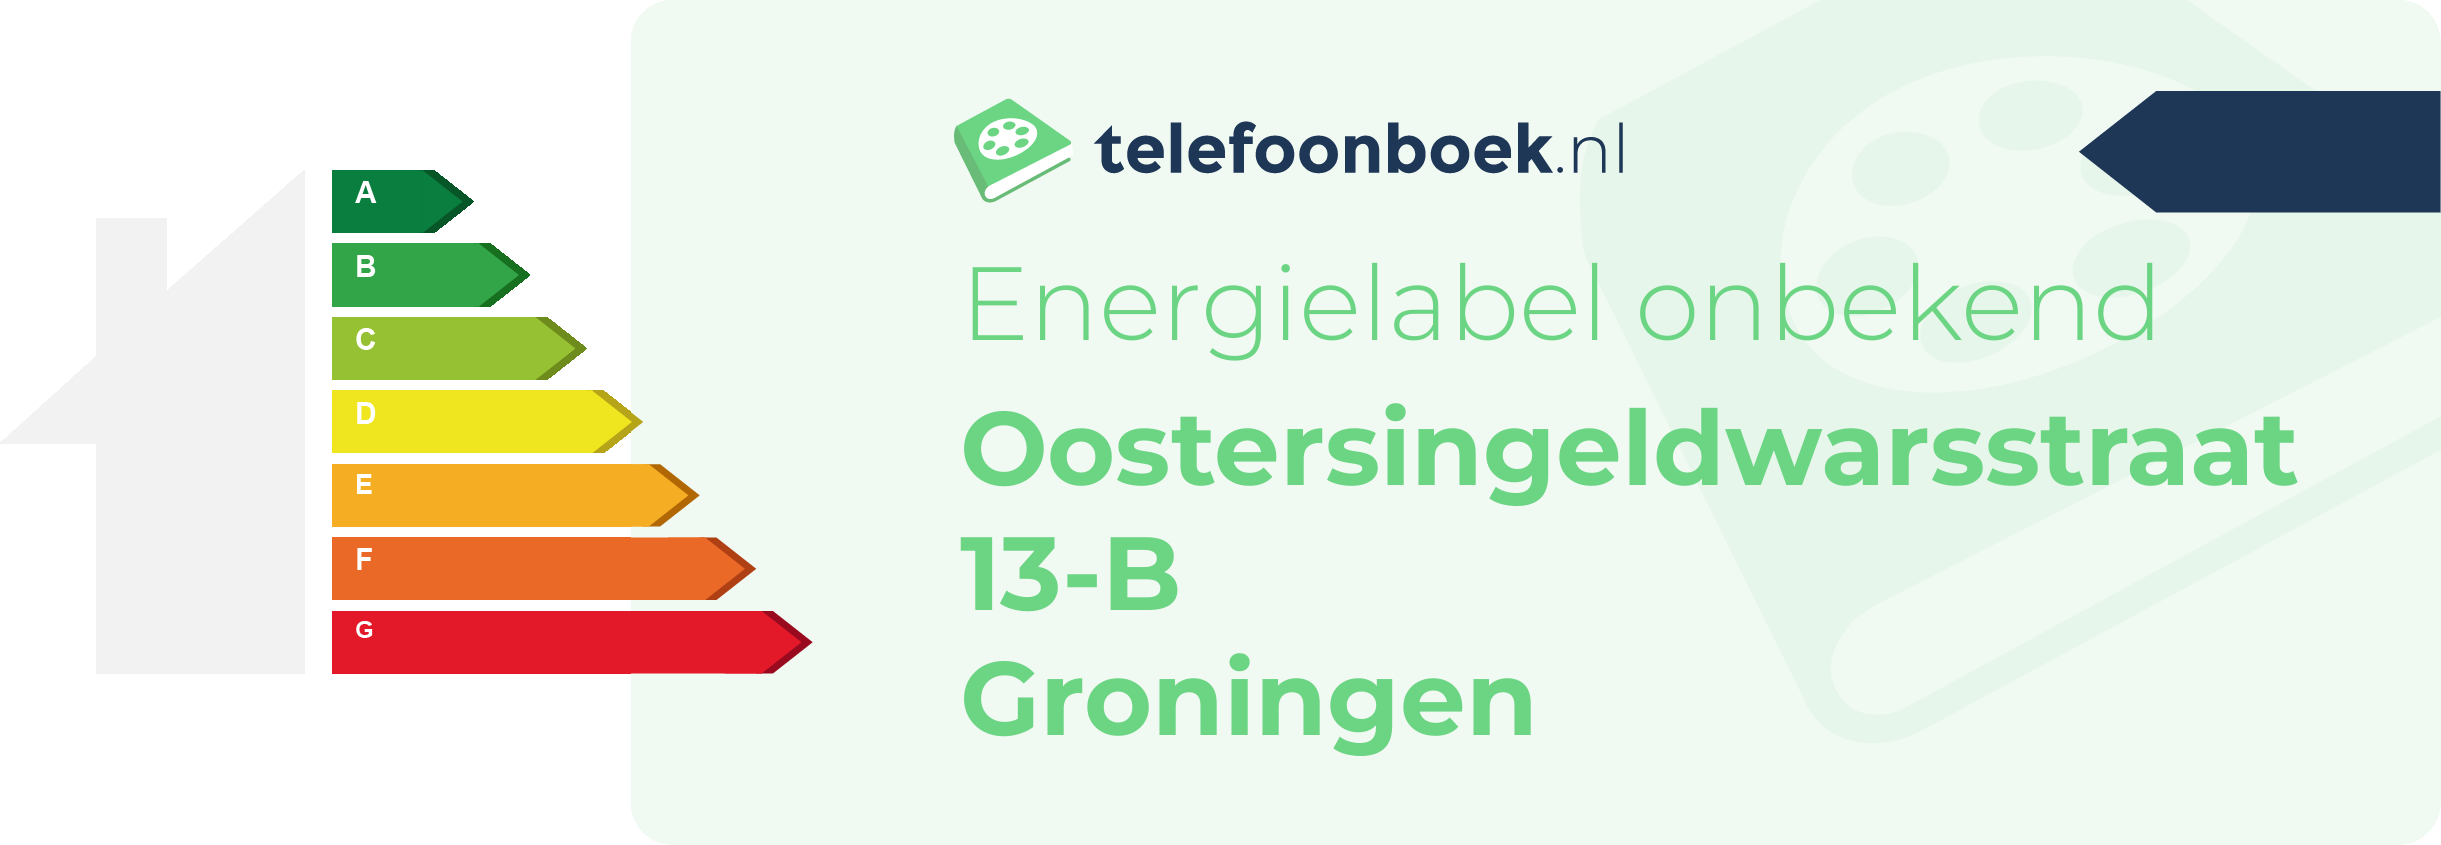 Energielabel Oostersingeldwarsstraat 13-B Groningen